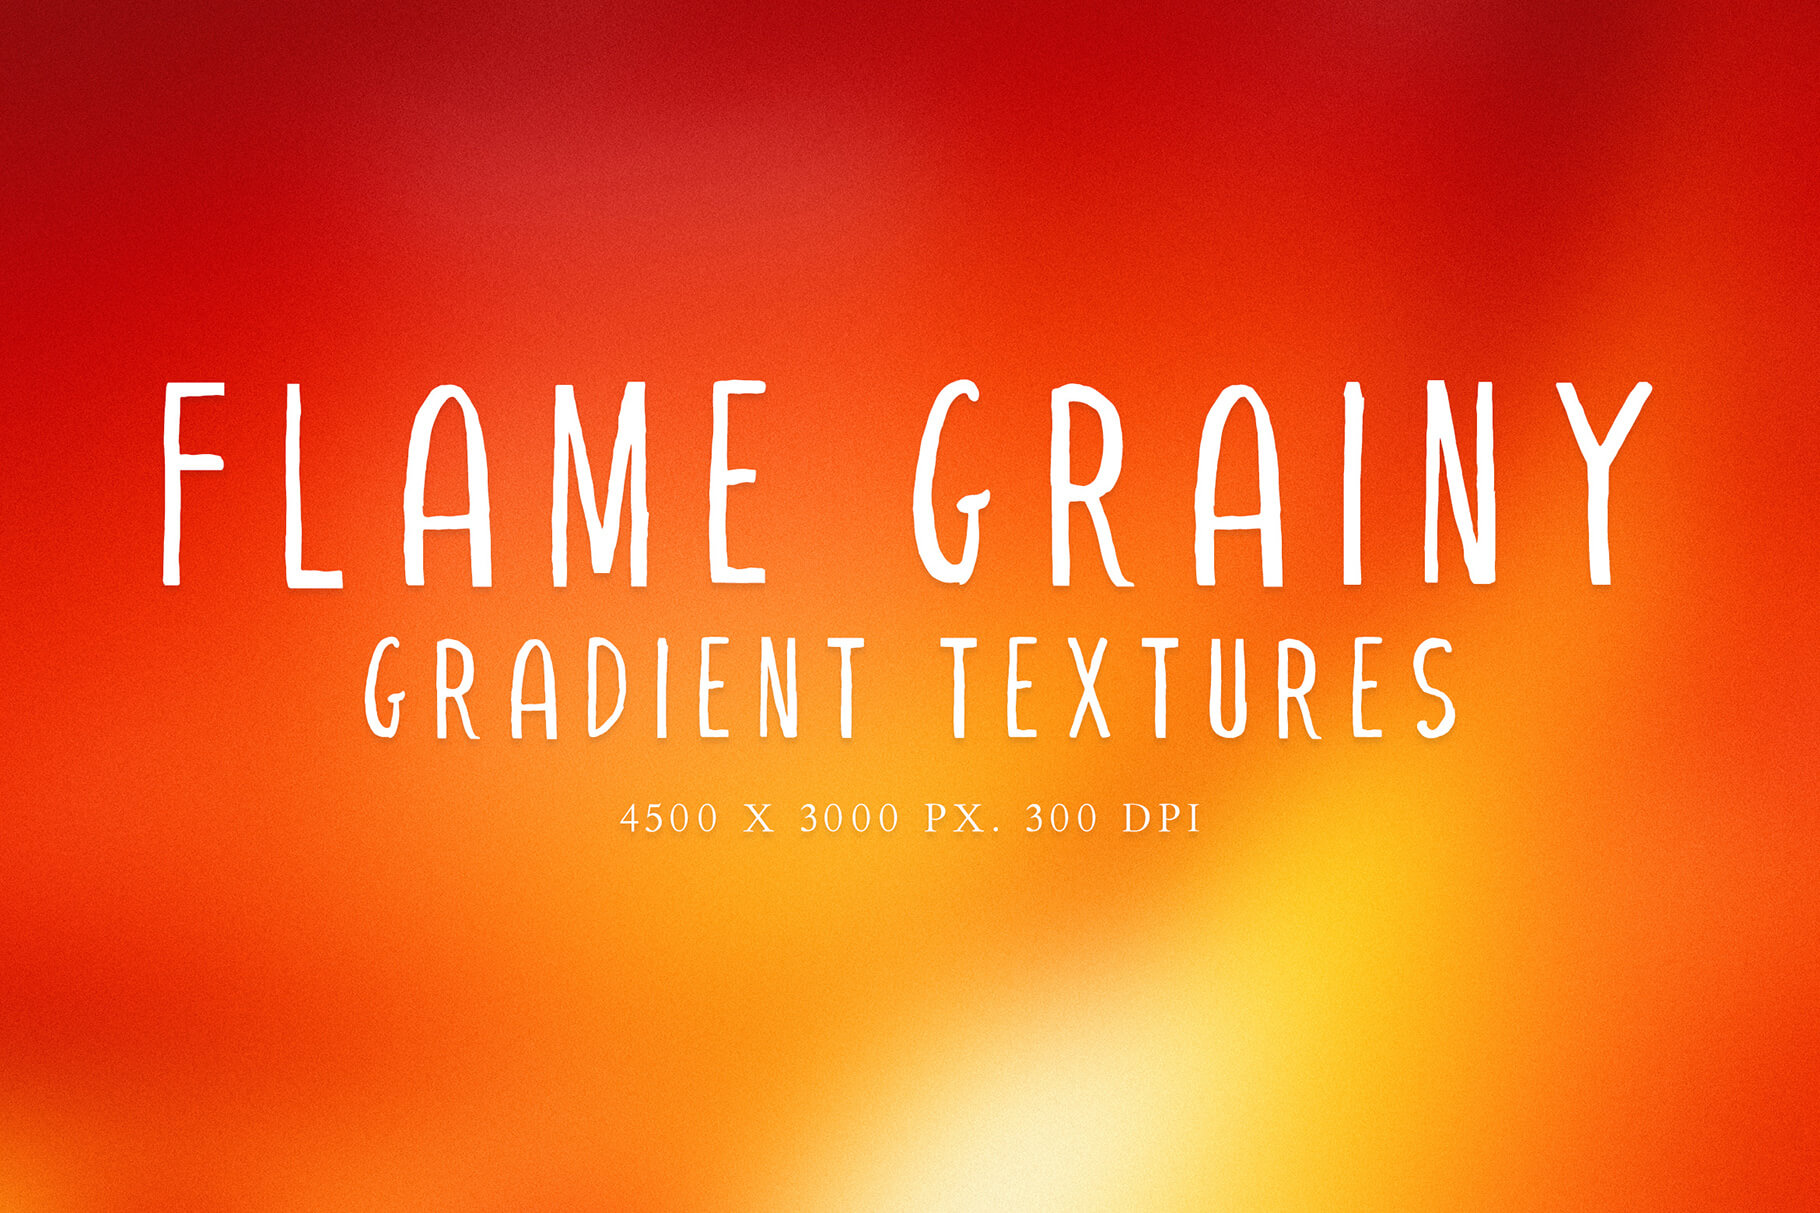 Flame Grainy Gradient Textures Cover